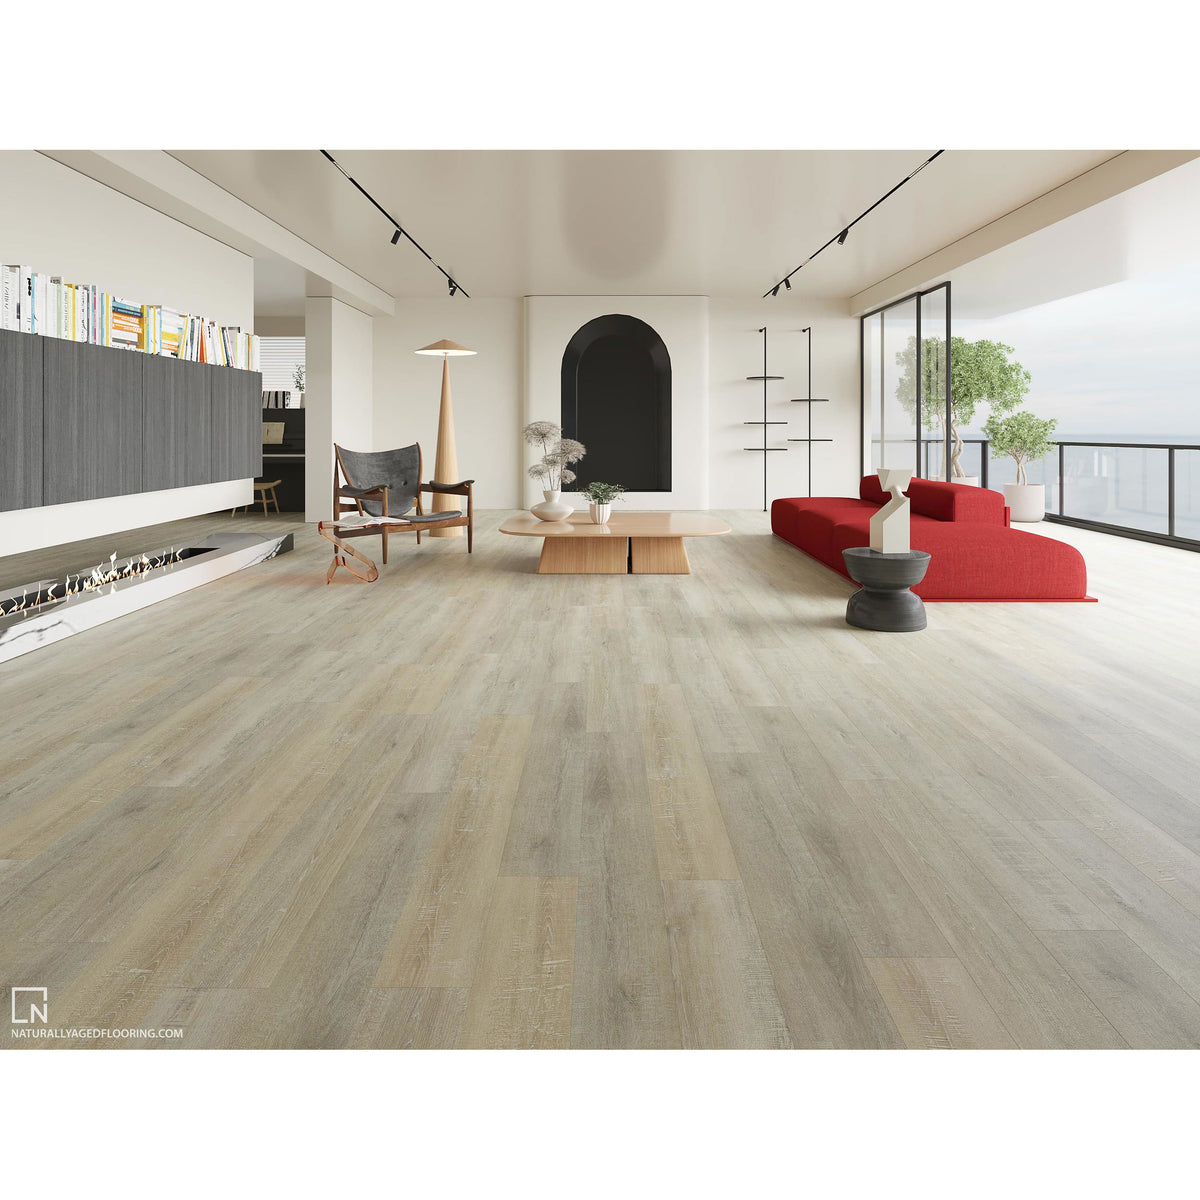 Naturally Aged Flooring - Northshore Laminate - Kona Installed